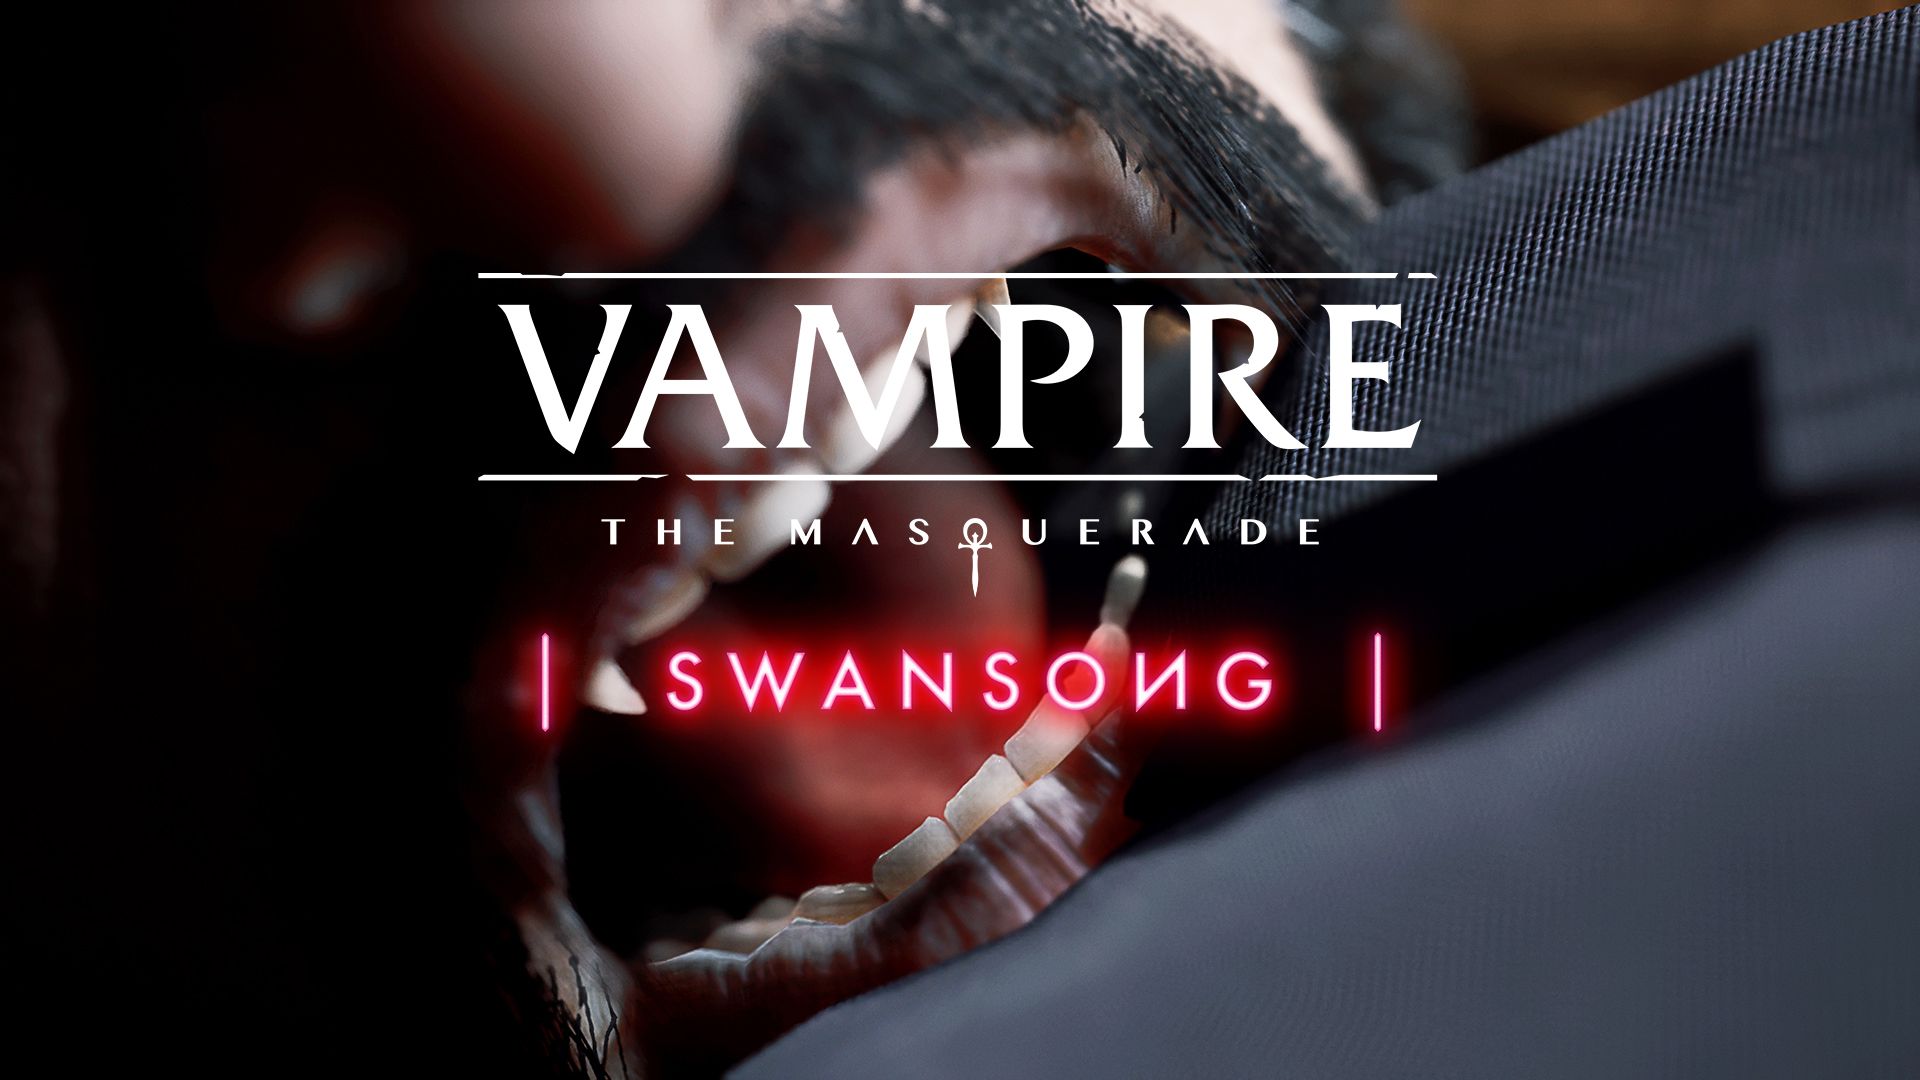 free downloads Vampire: The Masquerade – Swansong